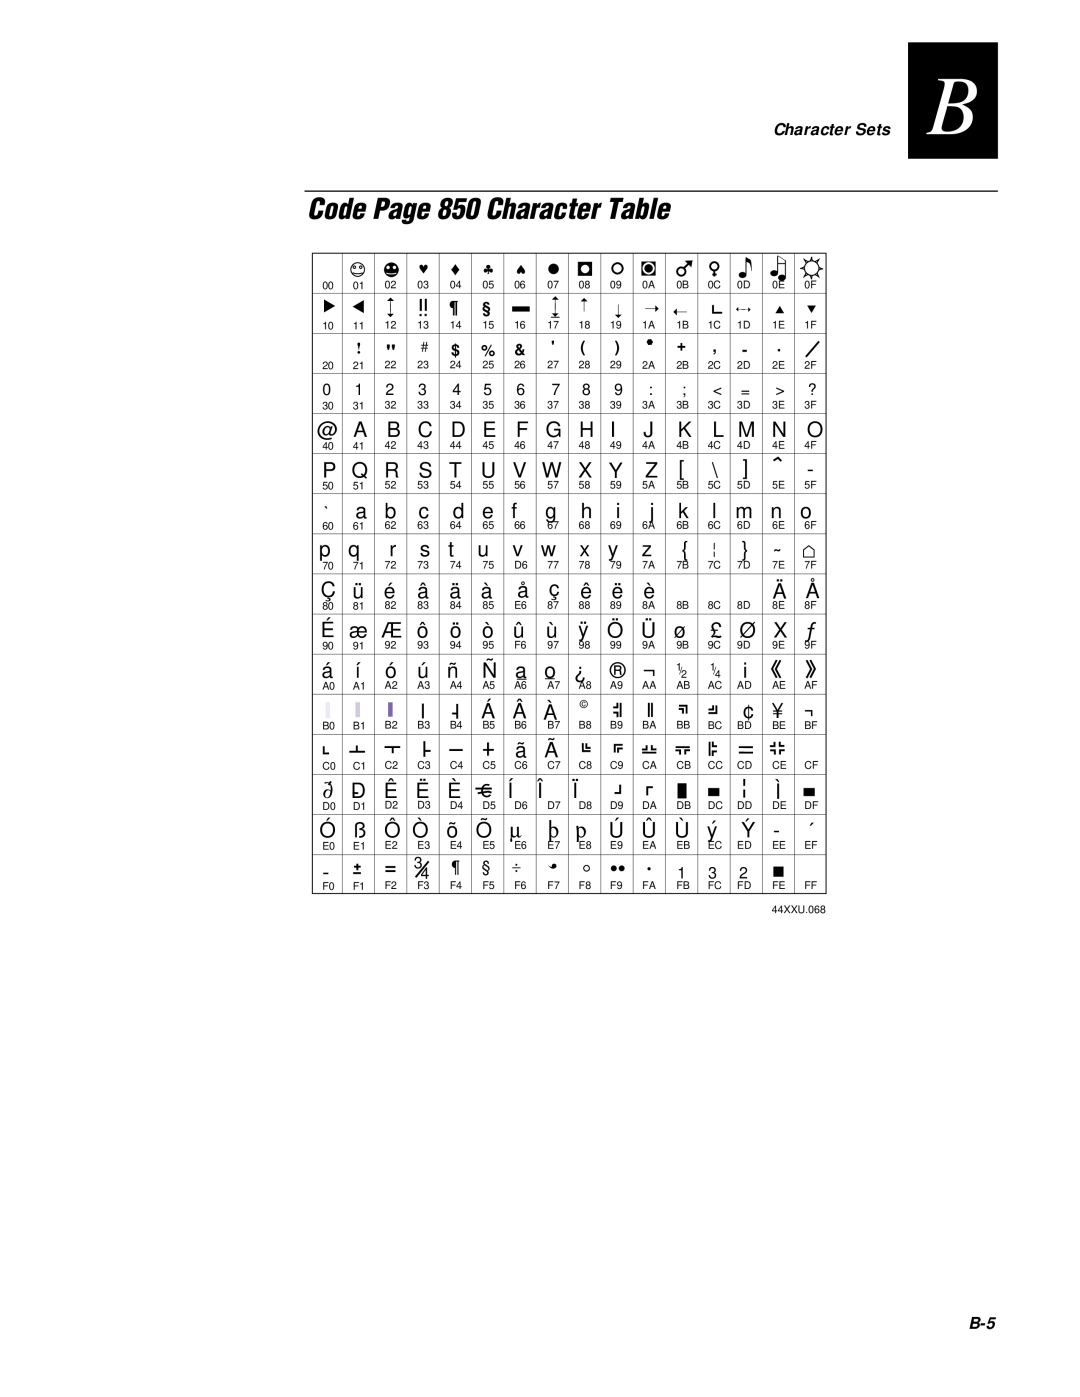 IBM EasyCoder 3400e user manual Code Page 850 Character Table 